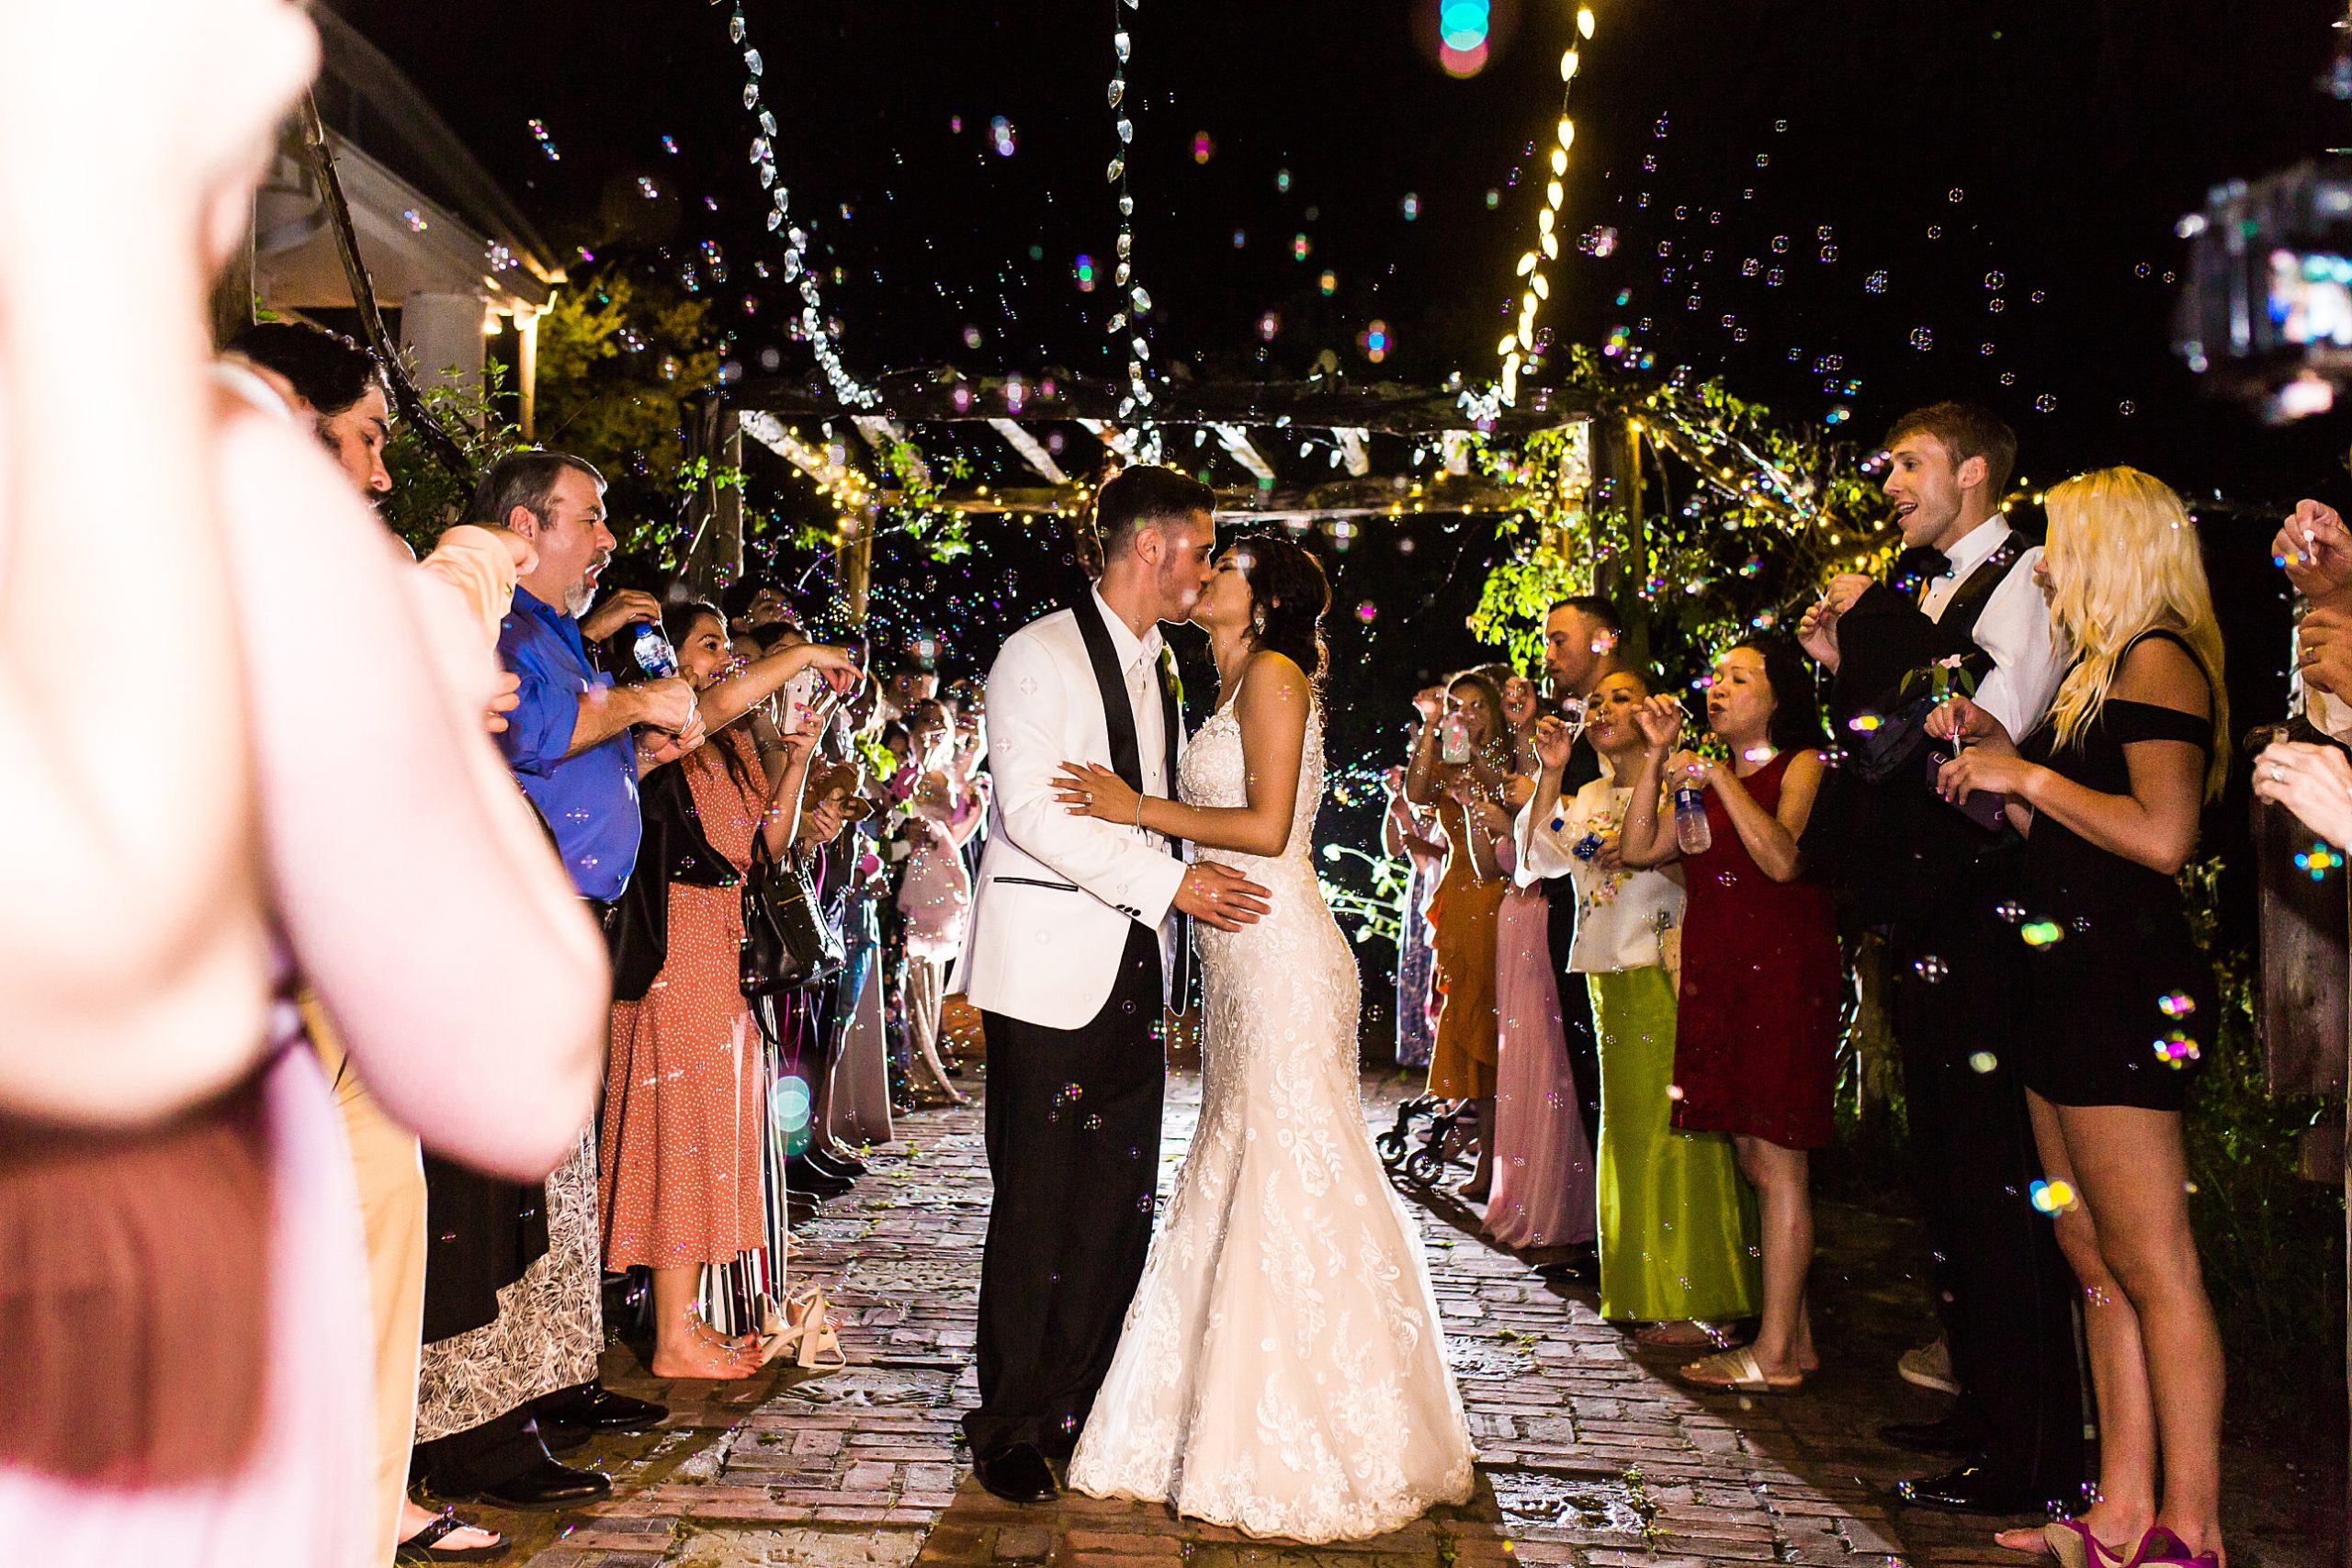 How to photograph a glow stick wedding exit - Nelya